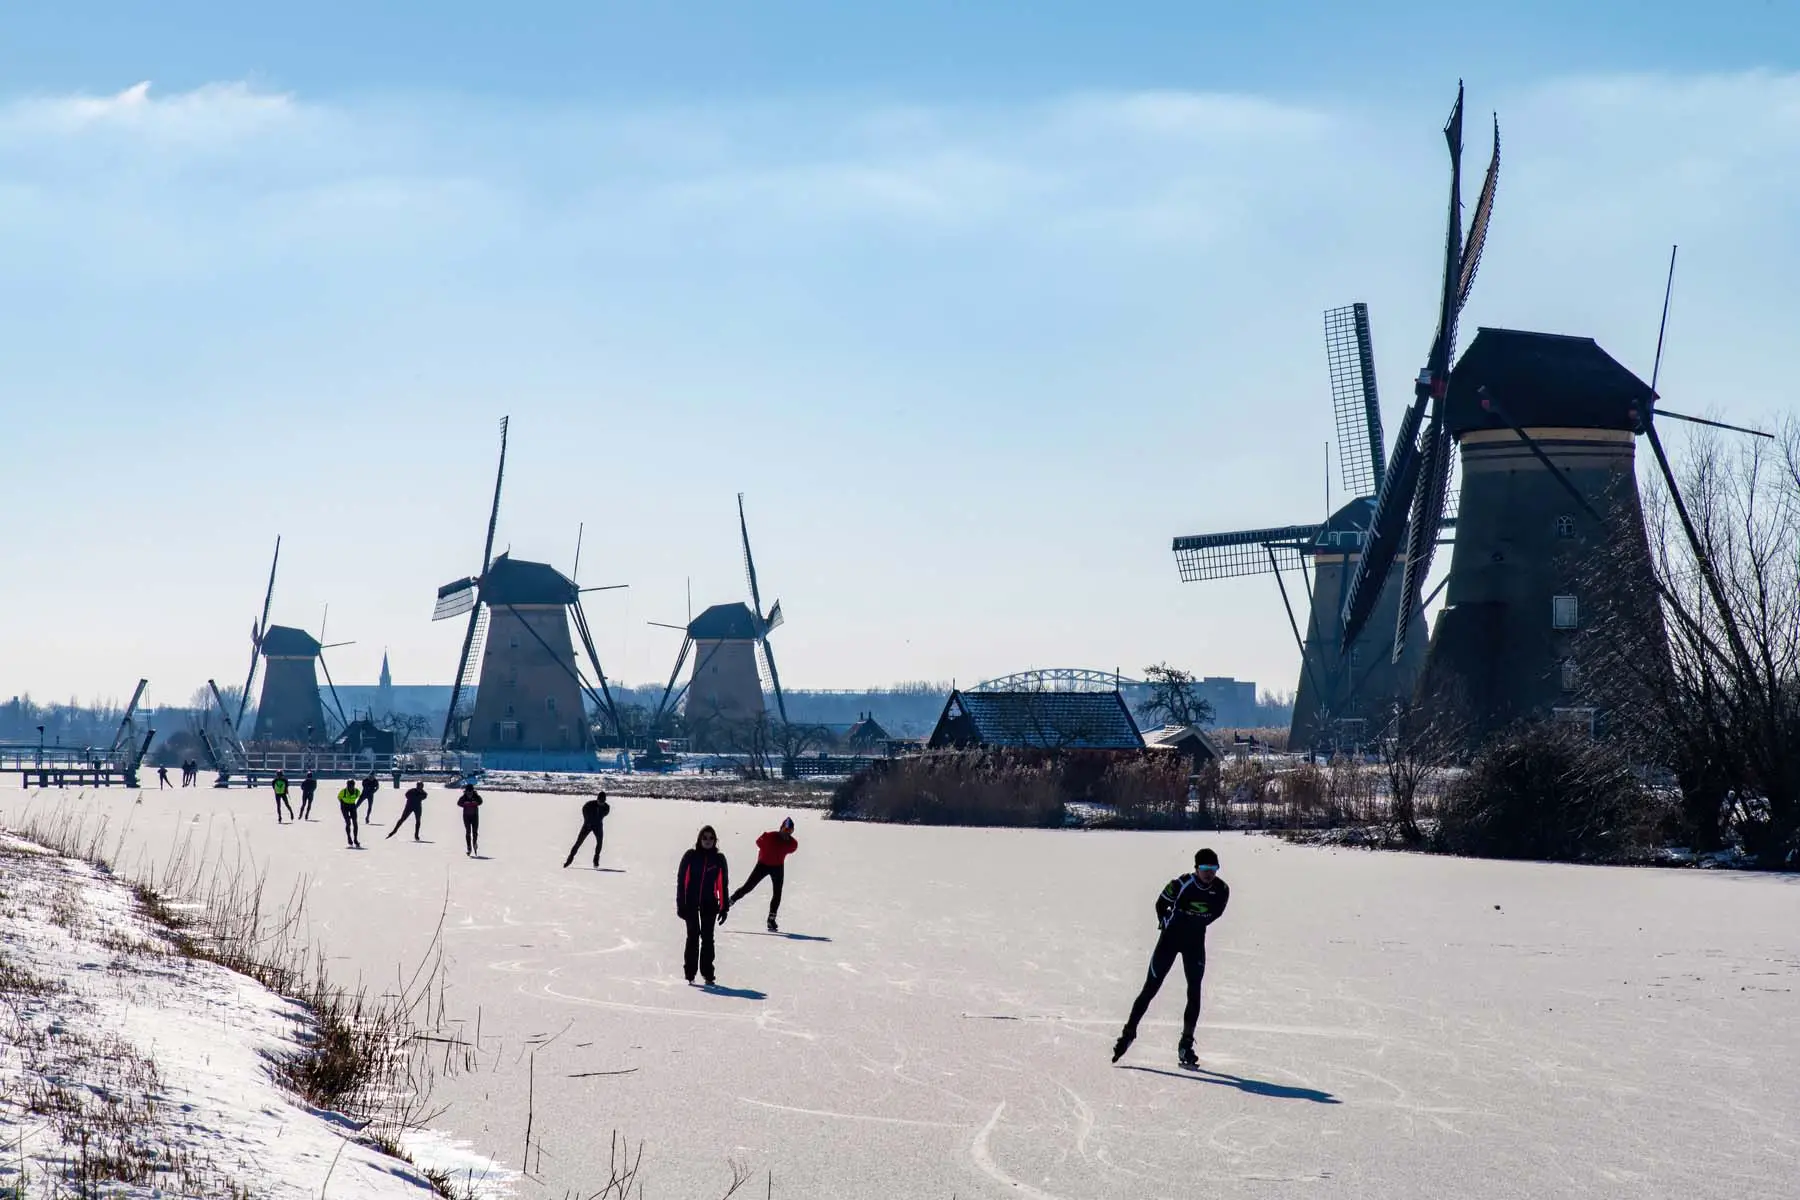 ice skaters on frozen lake near line of Dutch windmills